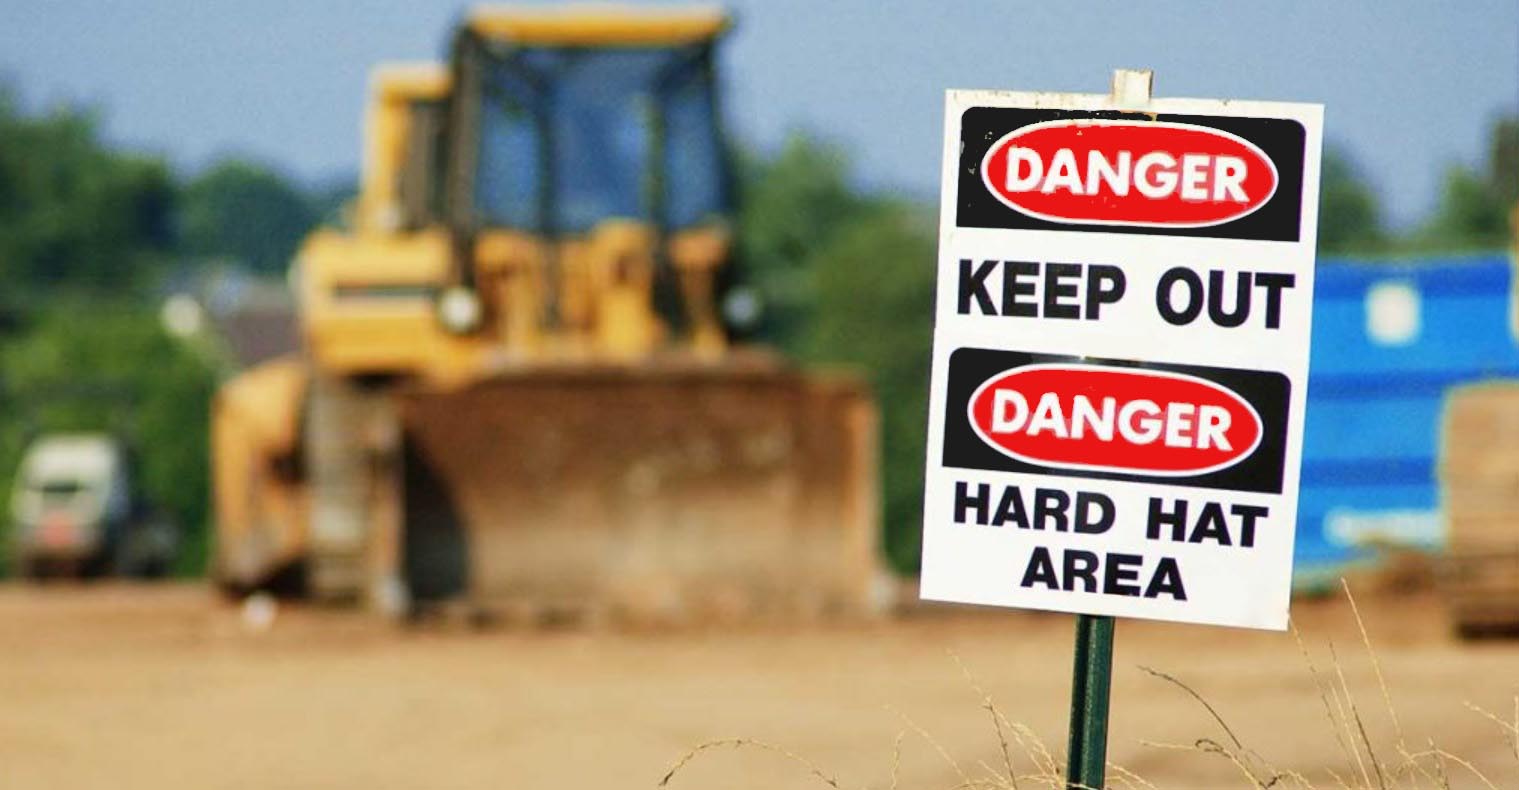 Construction Safety Focus – Caught-In-Between Hazards